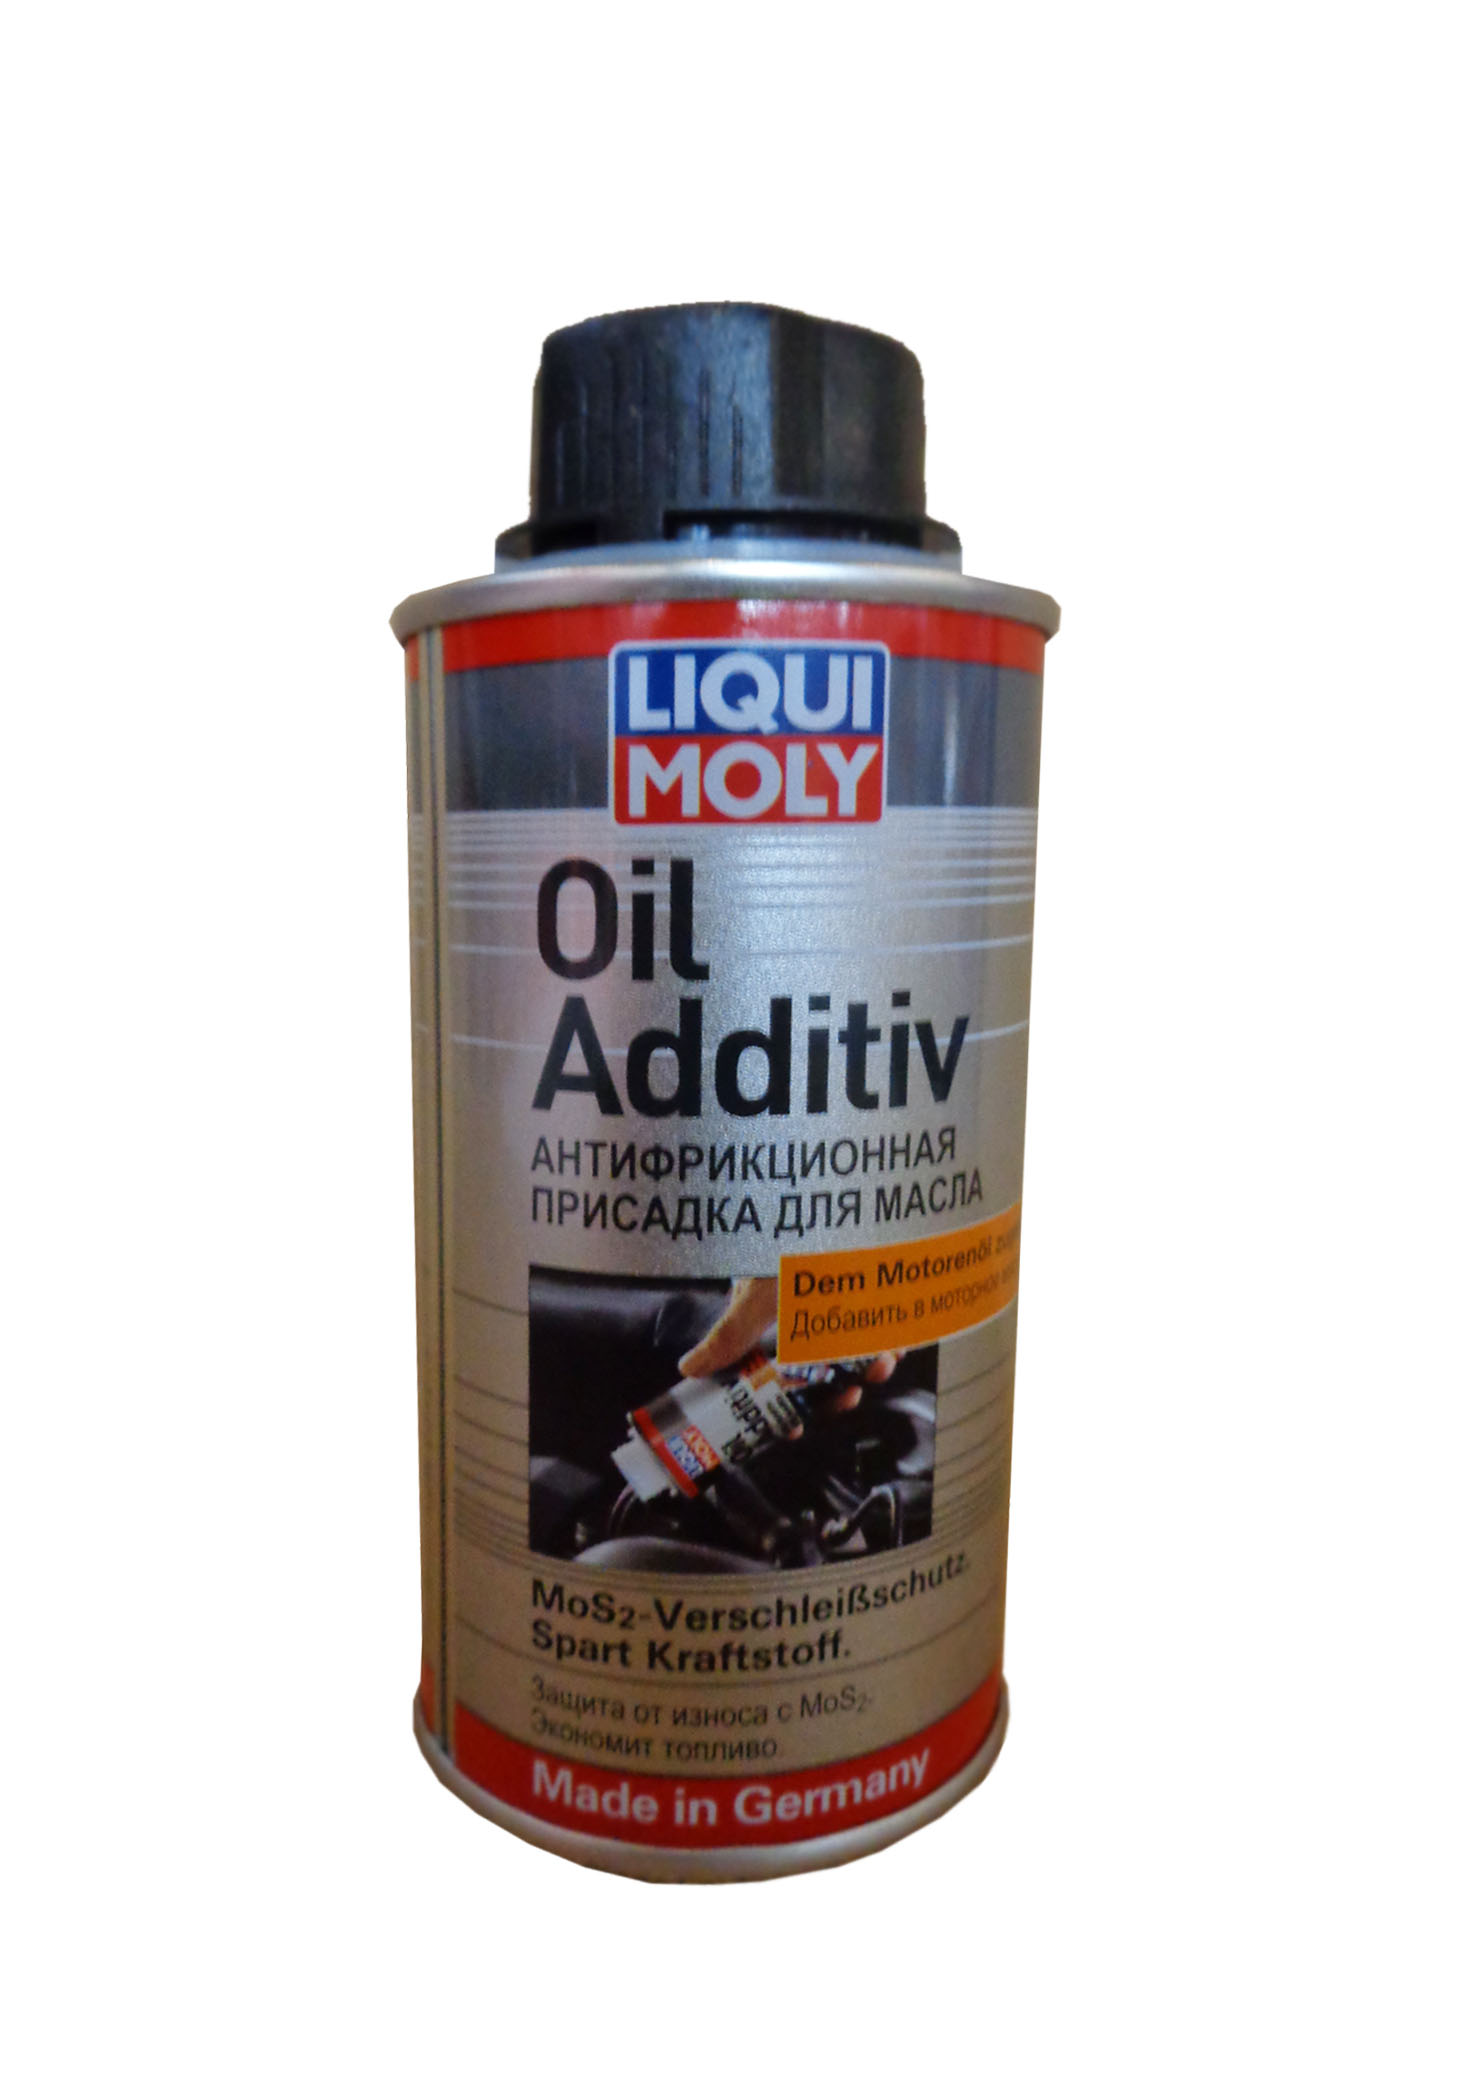 Антифрикционная присадка в моторное масло. Liqui Moly Oil Additiv 1011. Присадка с моs2 "Liqui Moly Oil Additiv" 125мл. Liqui Moly Oil Additiv. Дисульфид молибдена Liqui Moly.